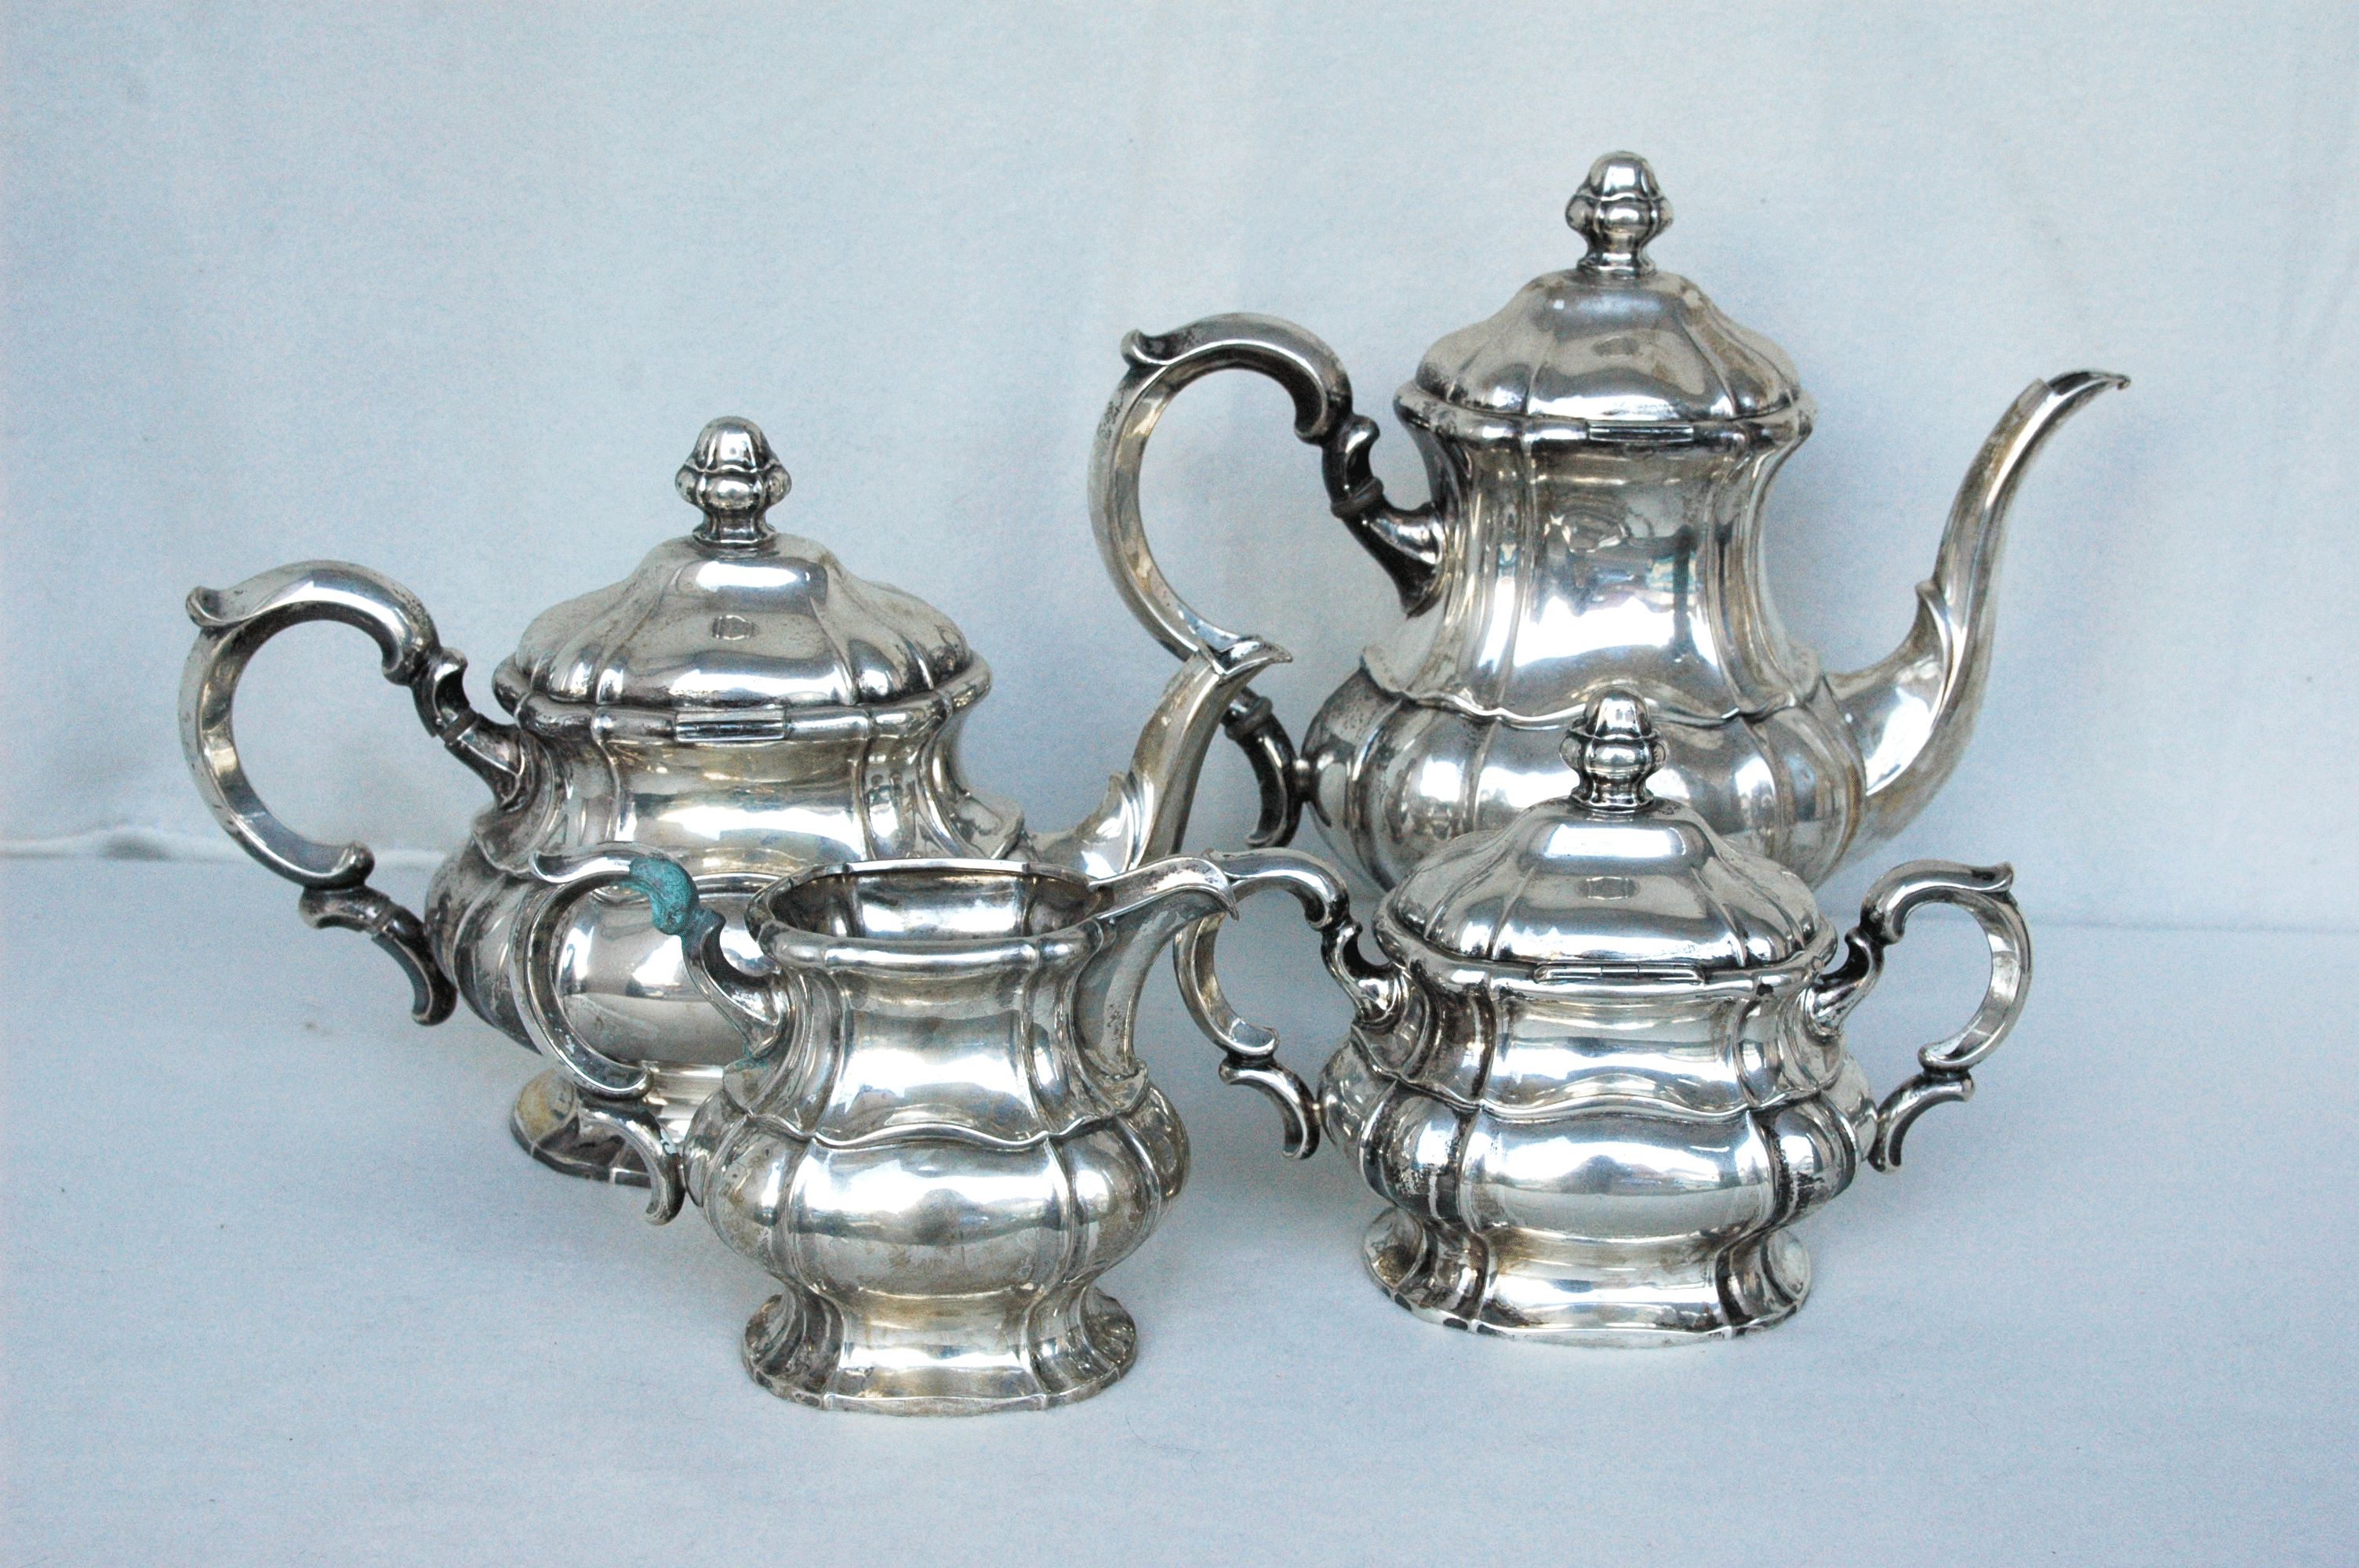 Kaffeekanne, Teekanne, Rahmservice, 835/- Silber, 1670 g - Bild 2 aus 7